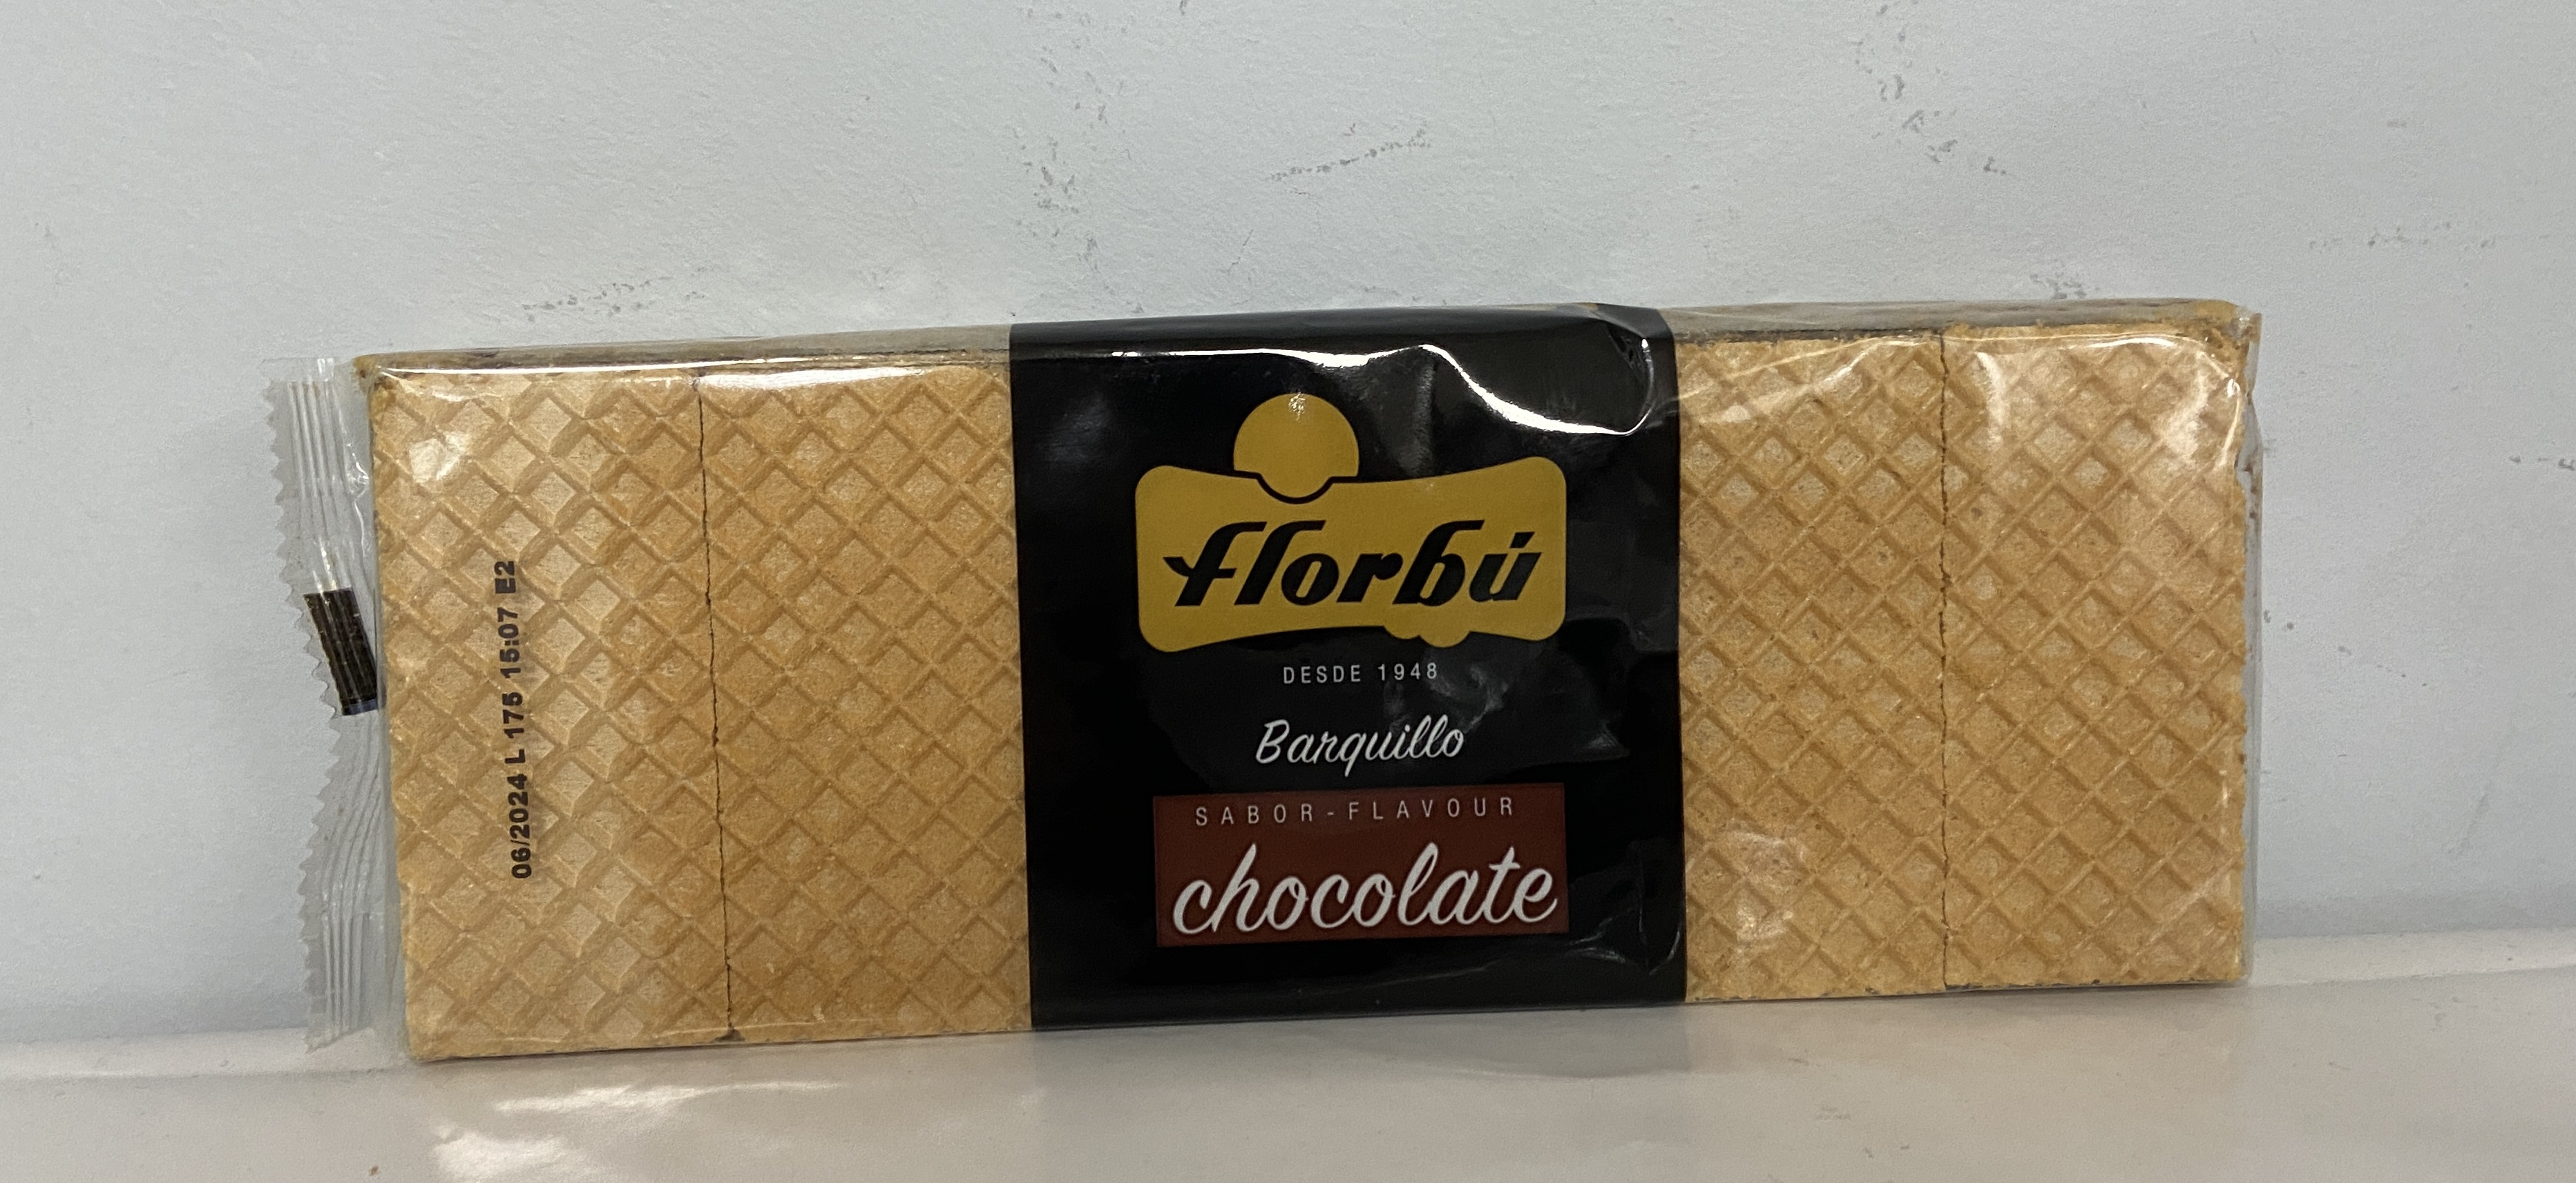 BARQUILLO FLORBU CHOCOLATE 210 GR